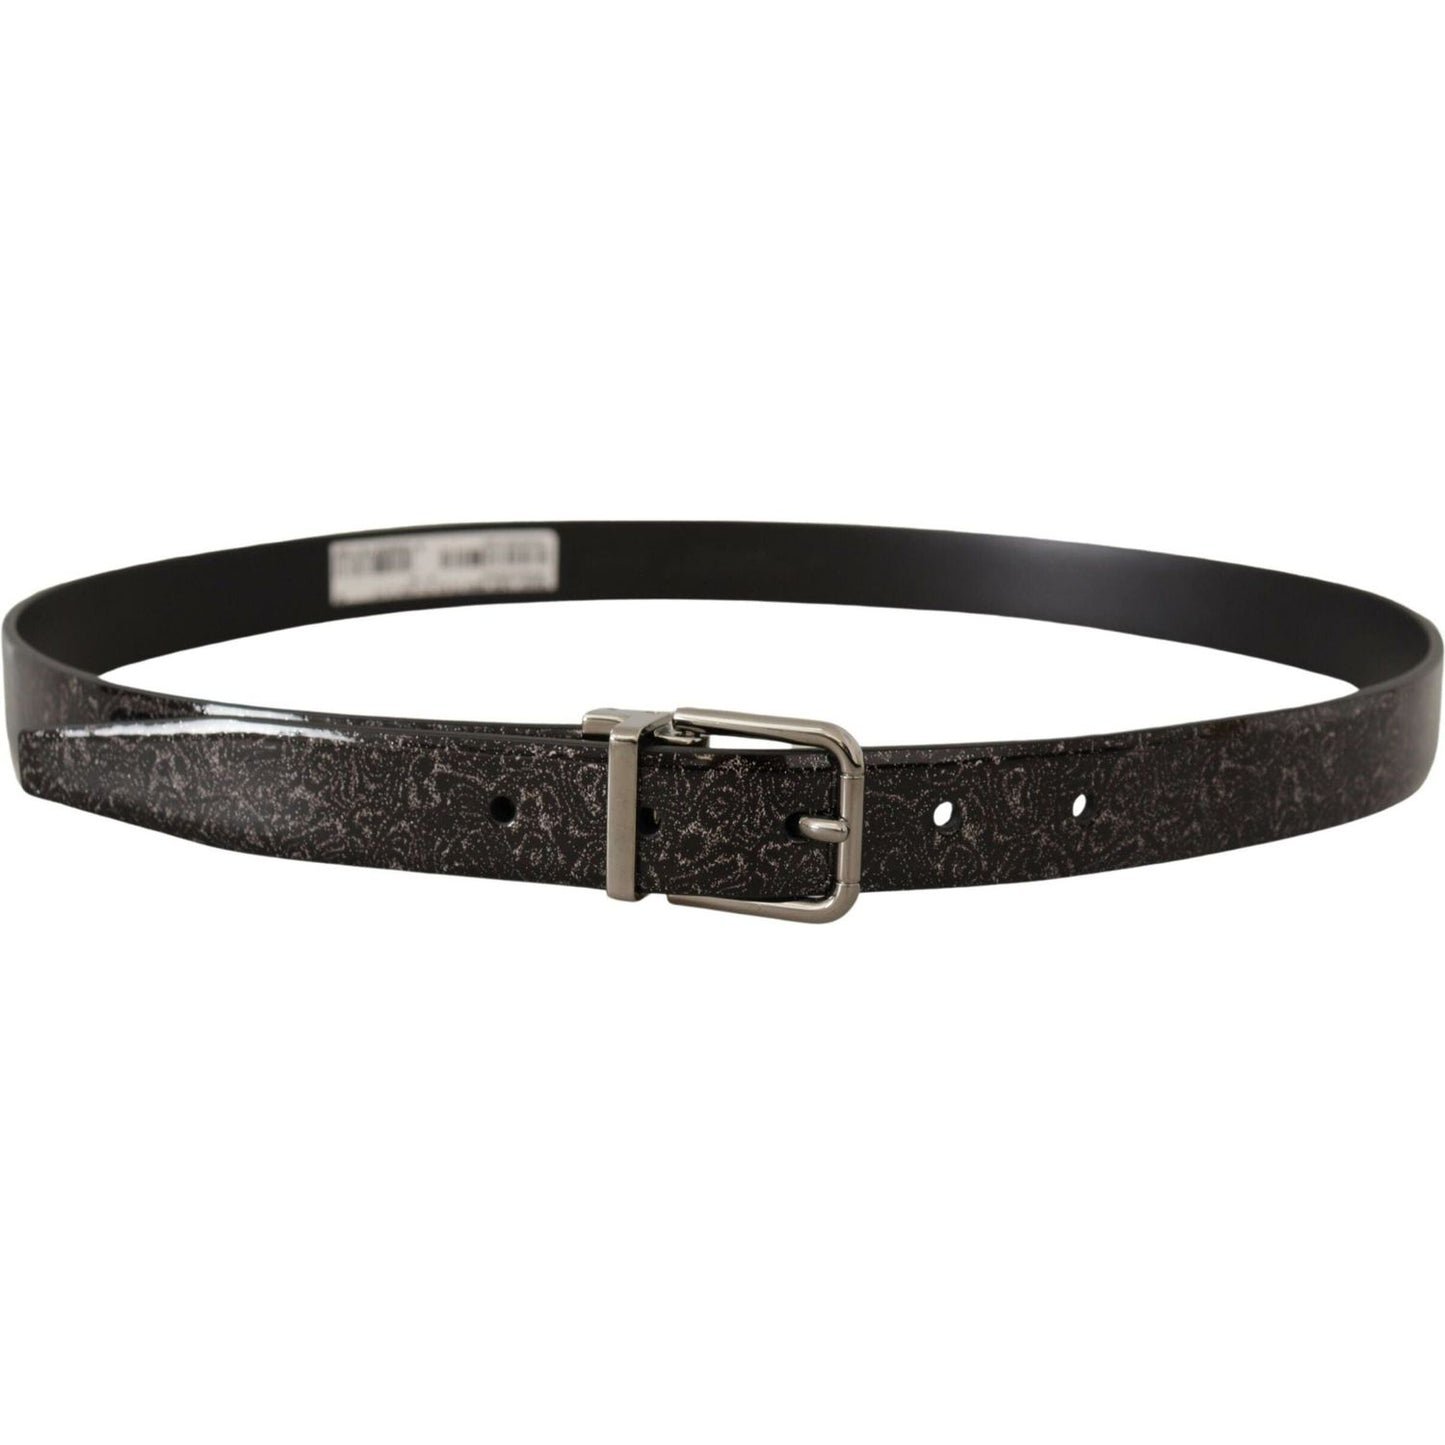 Dolce & GabbanaSleek Grosgrain Leather Belt with Metal BuckleMcRichard Designer Brands£309.00